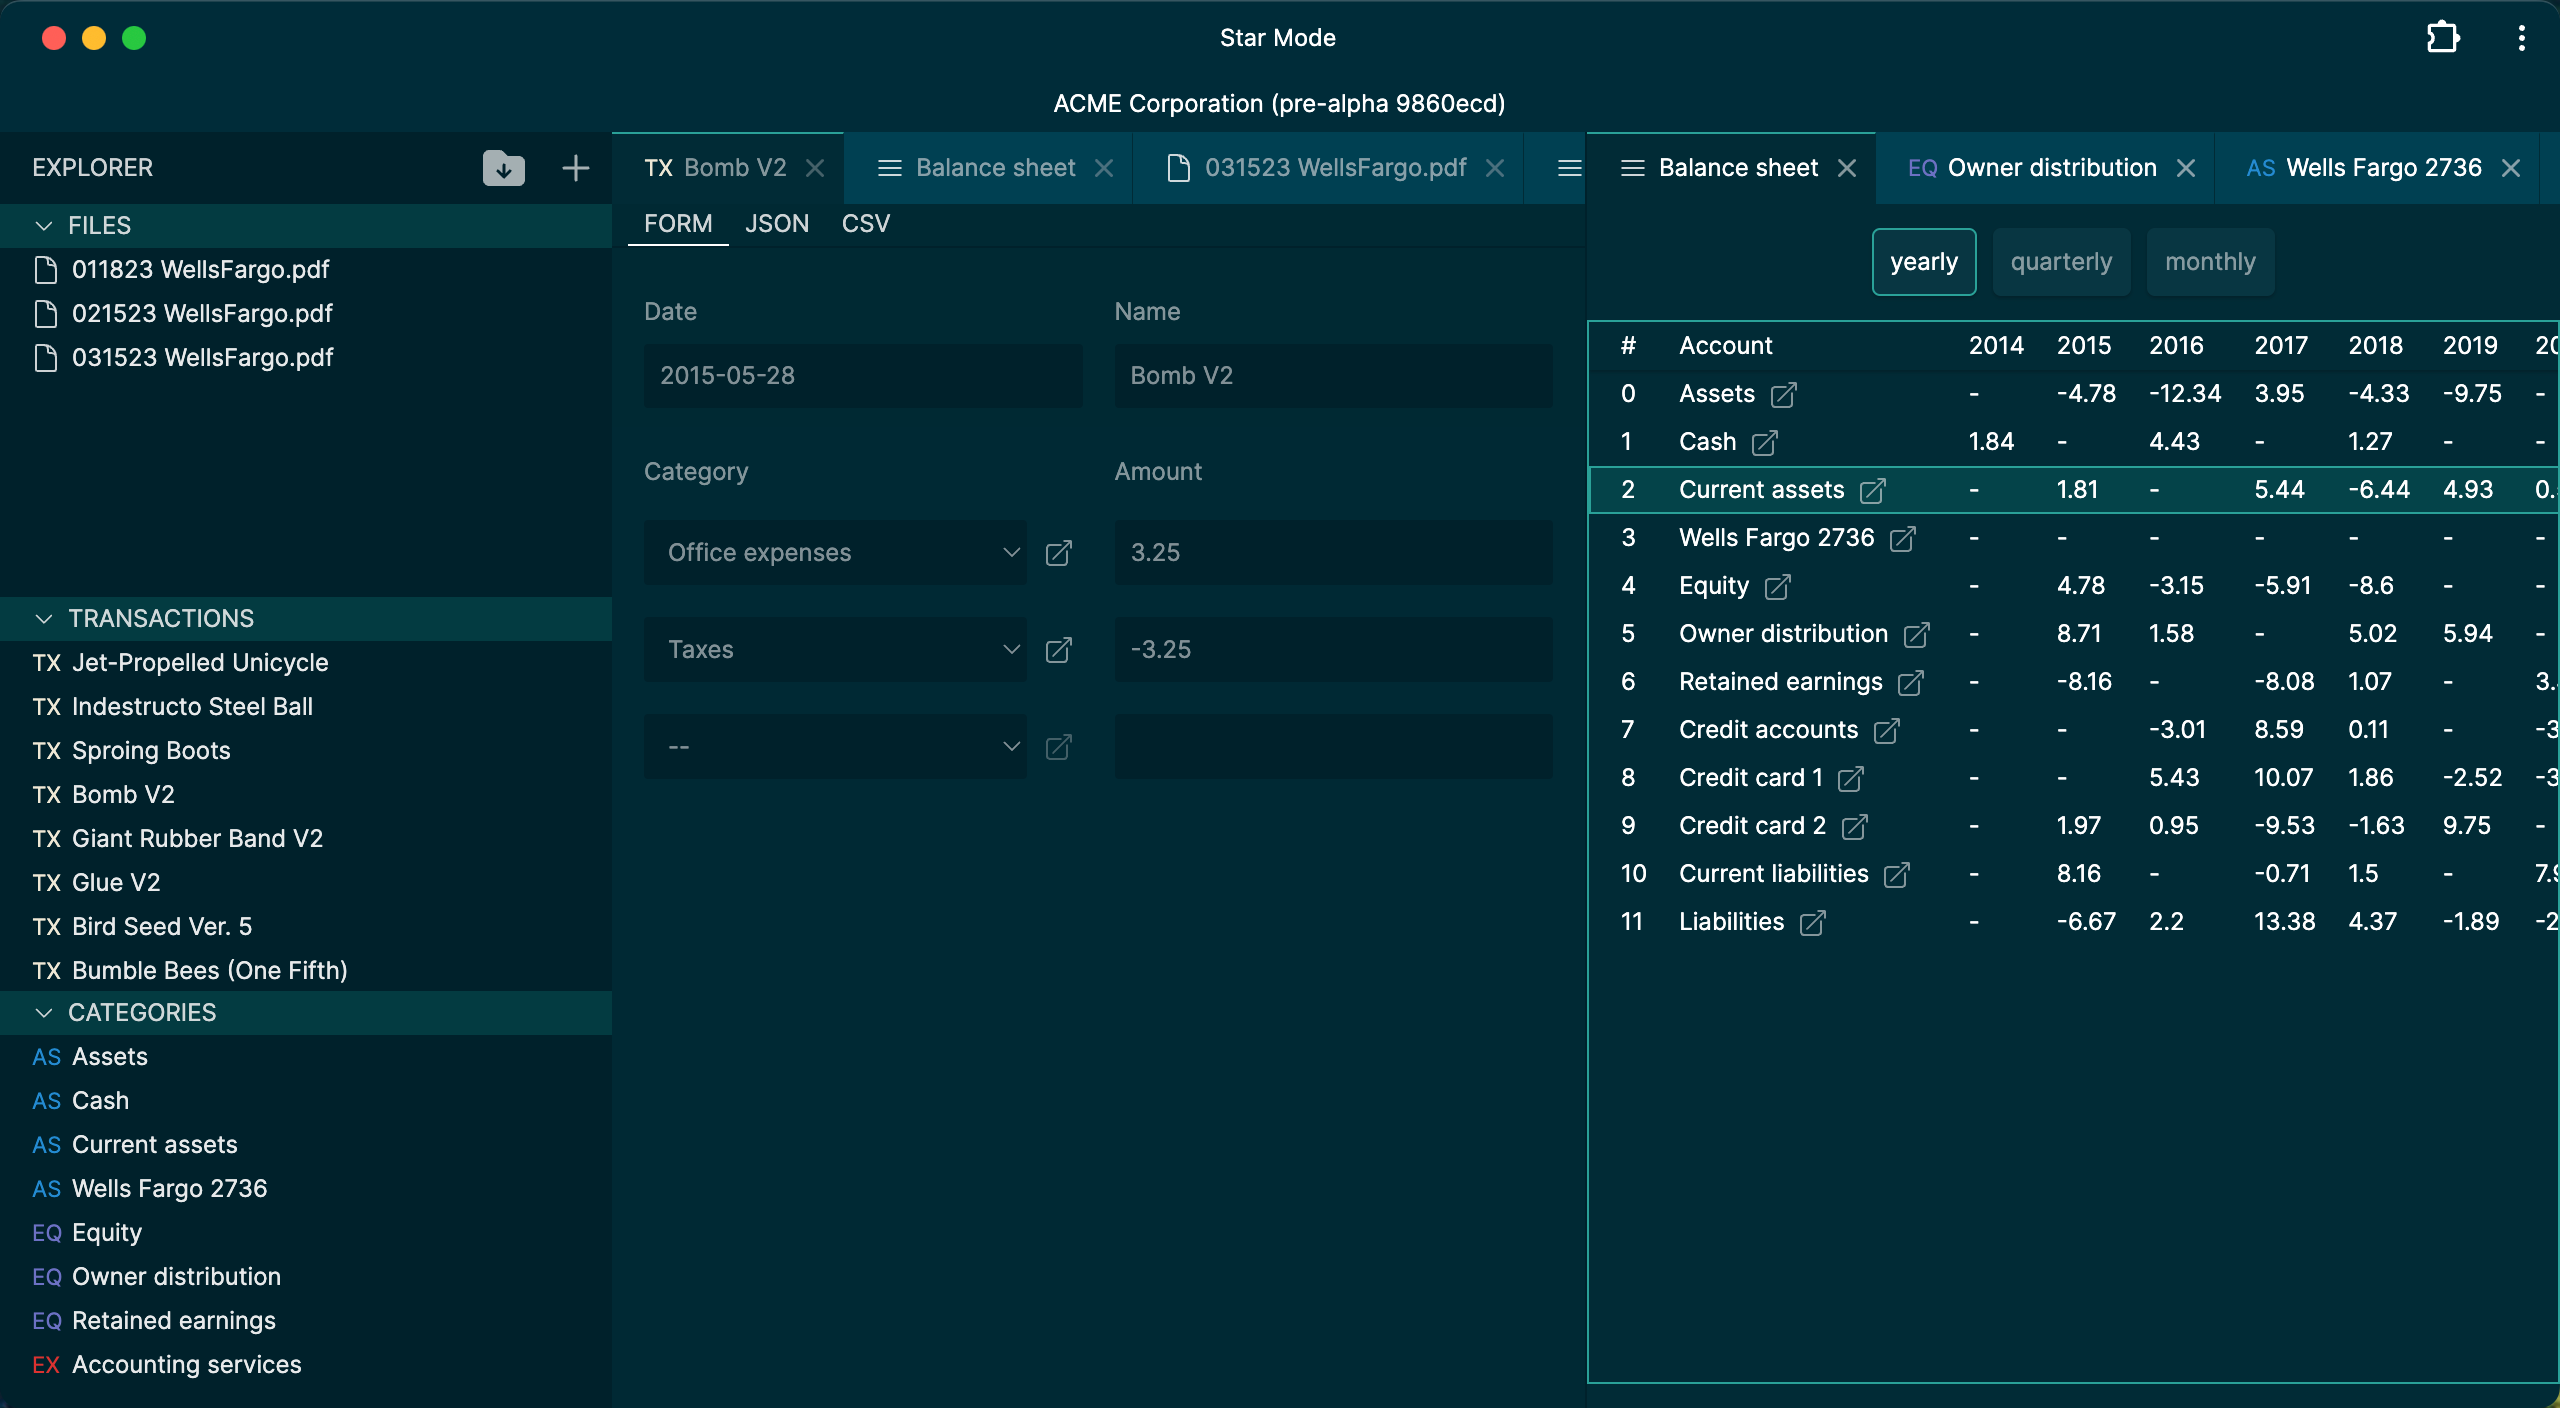 Screenshot of the STΛR MODE user interface